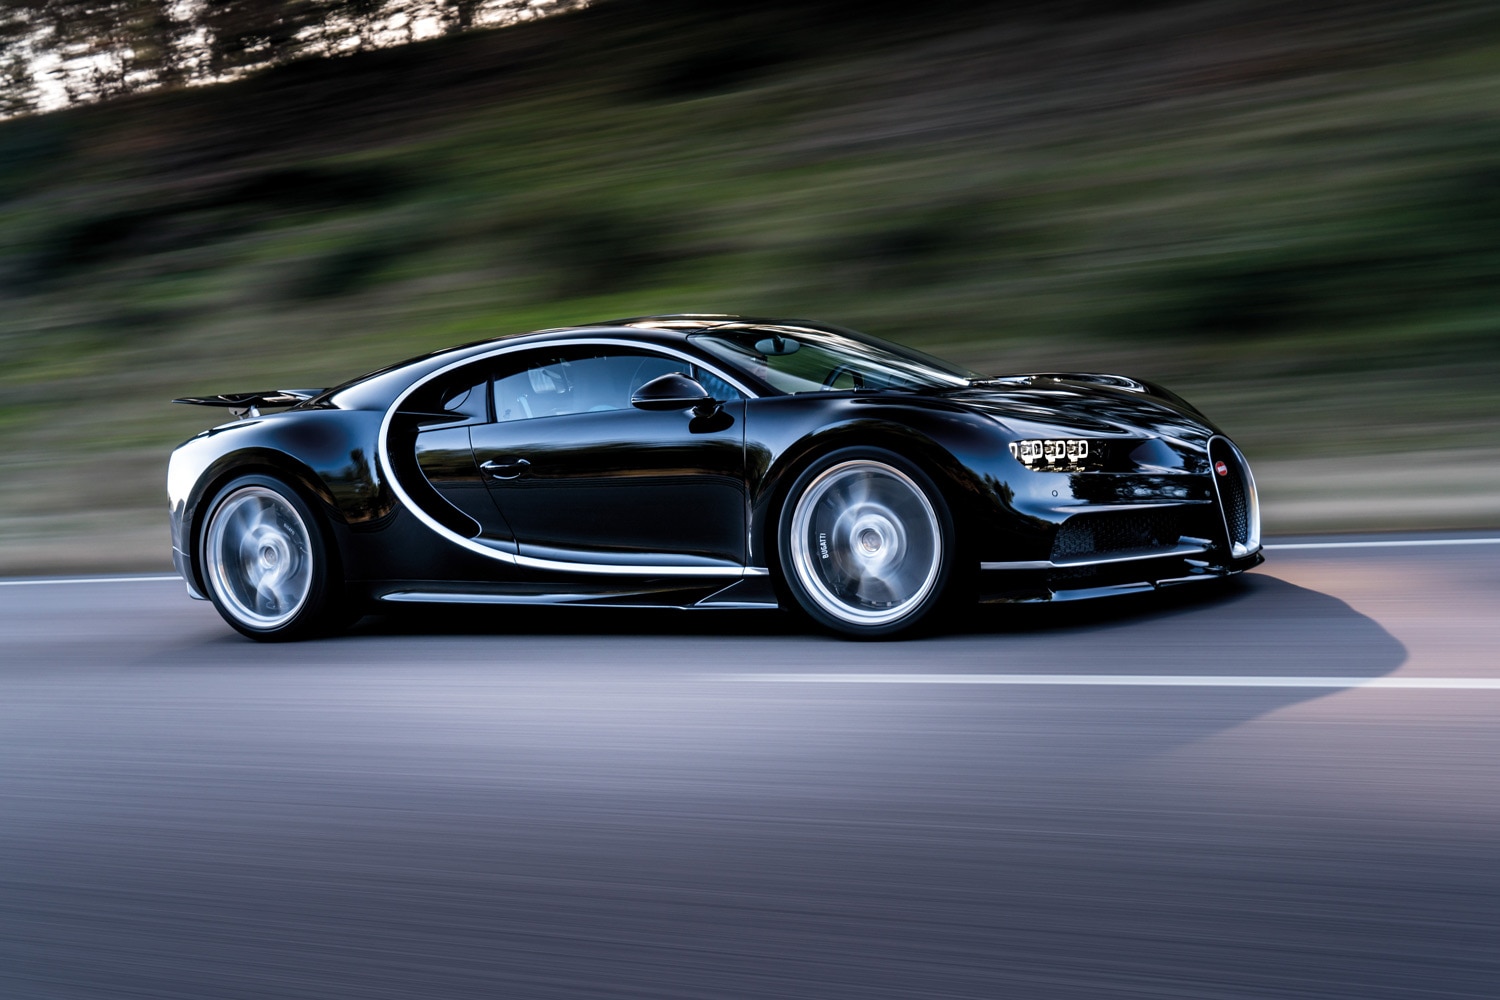 Black Bugatti being driven on a road.